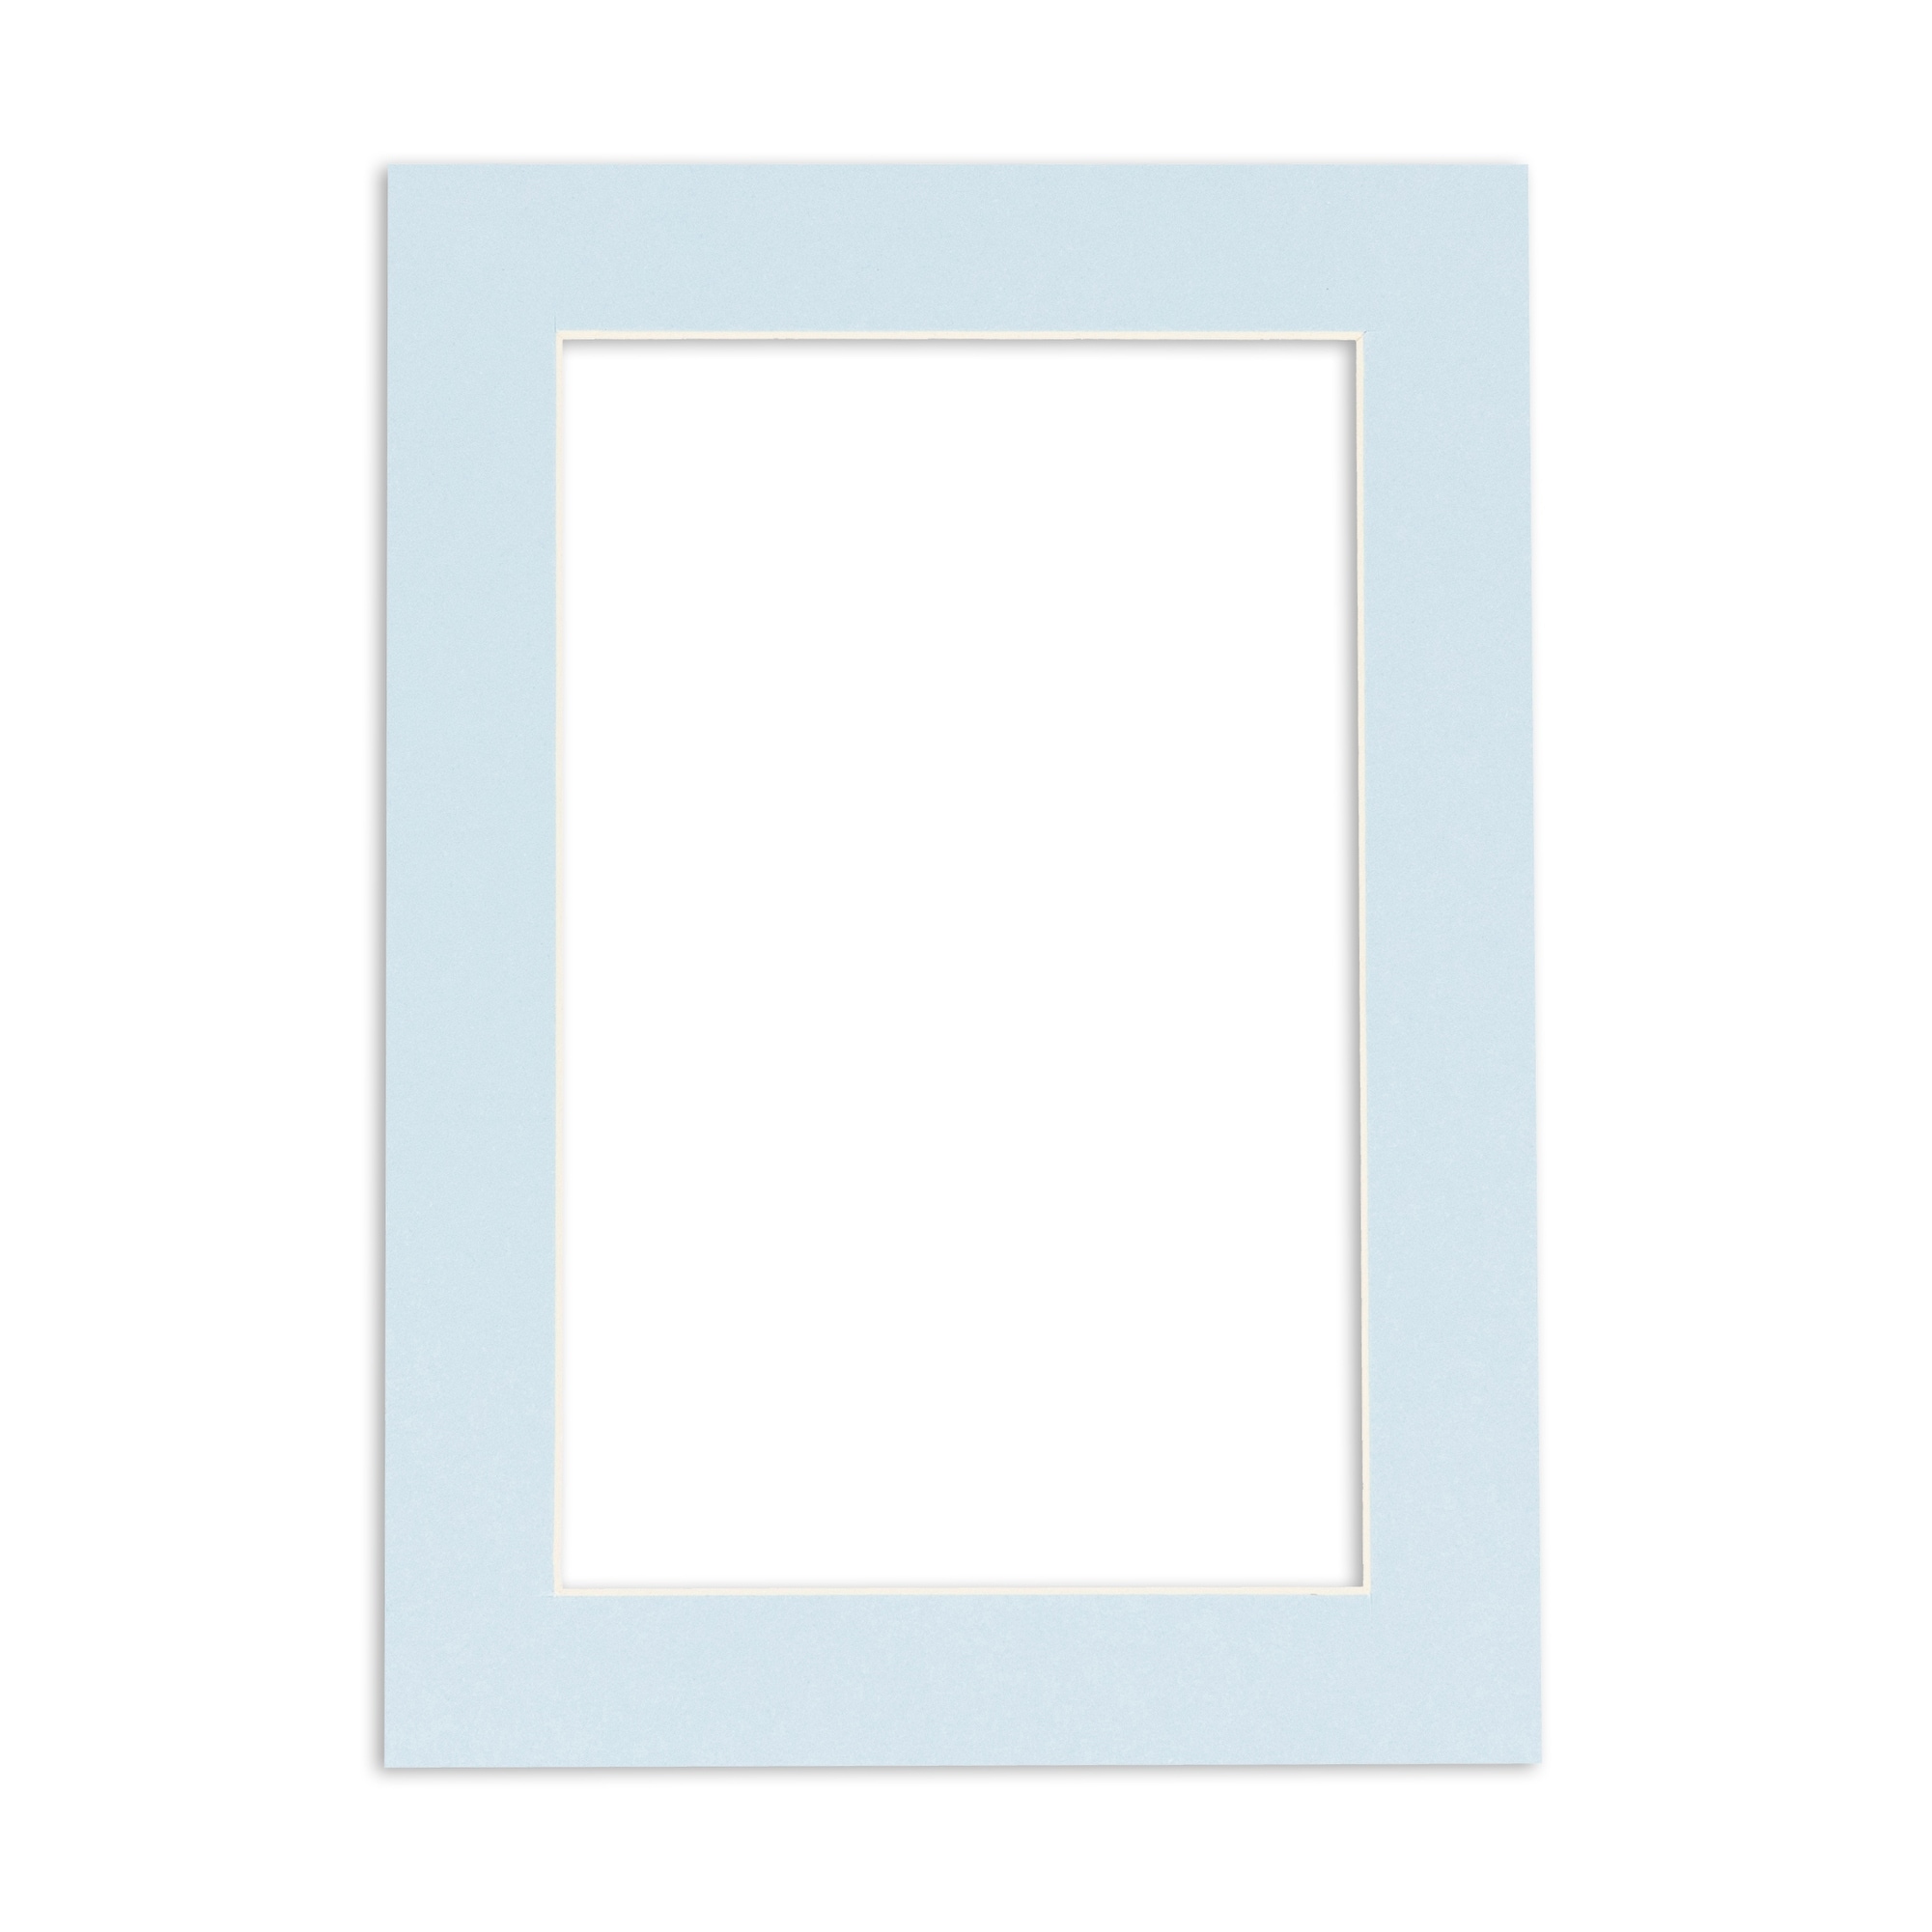 5x7 Mat for 8x10 Frame - Precut Mat Board Acid-Free Teal Blue 5x7